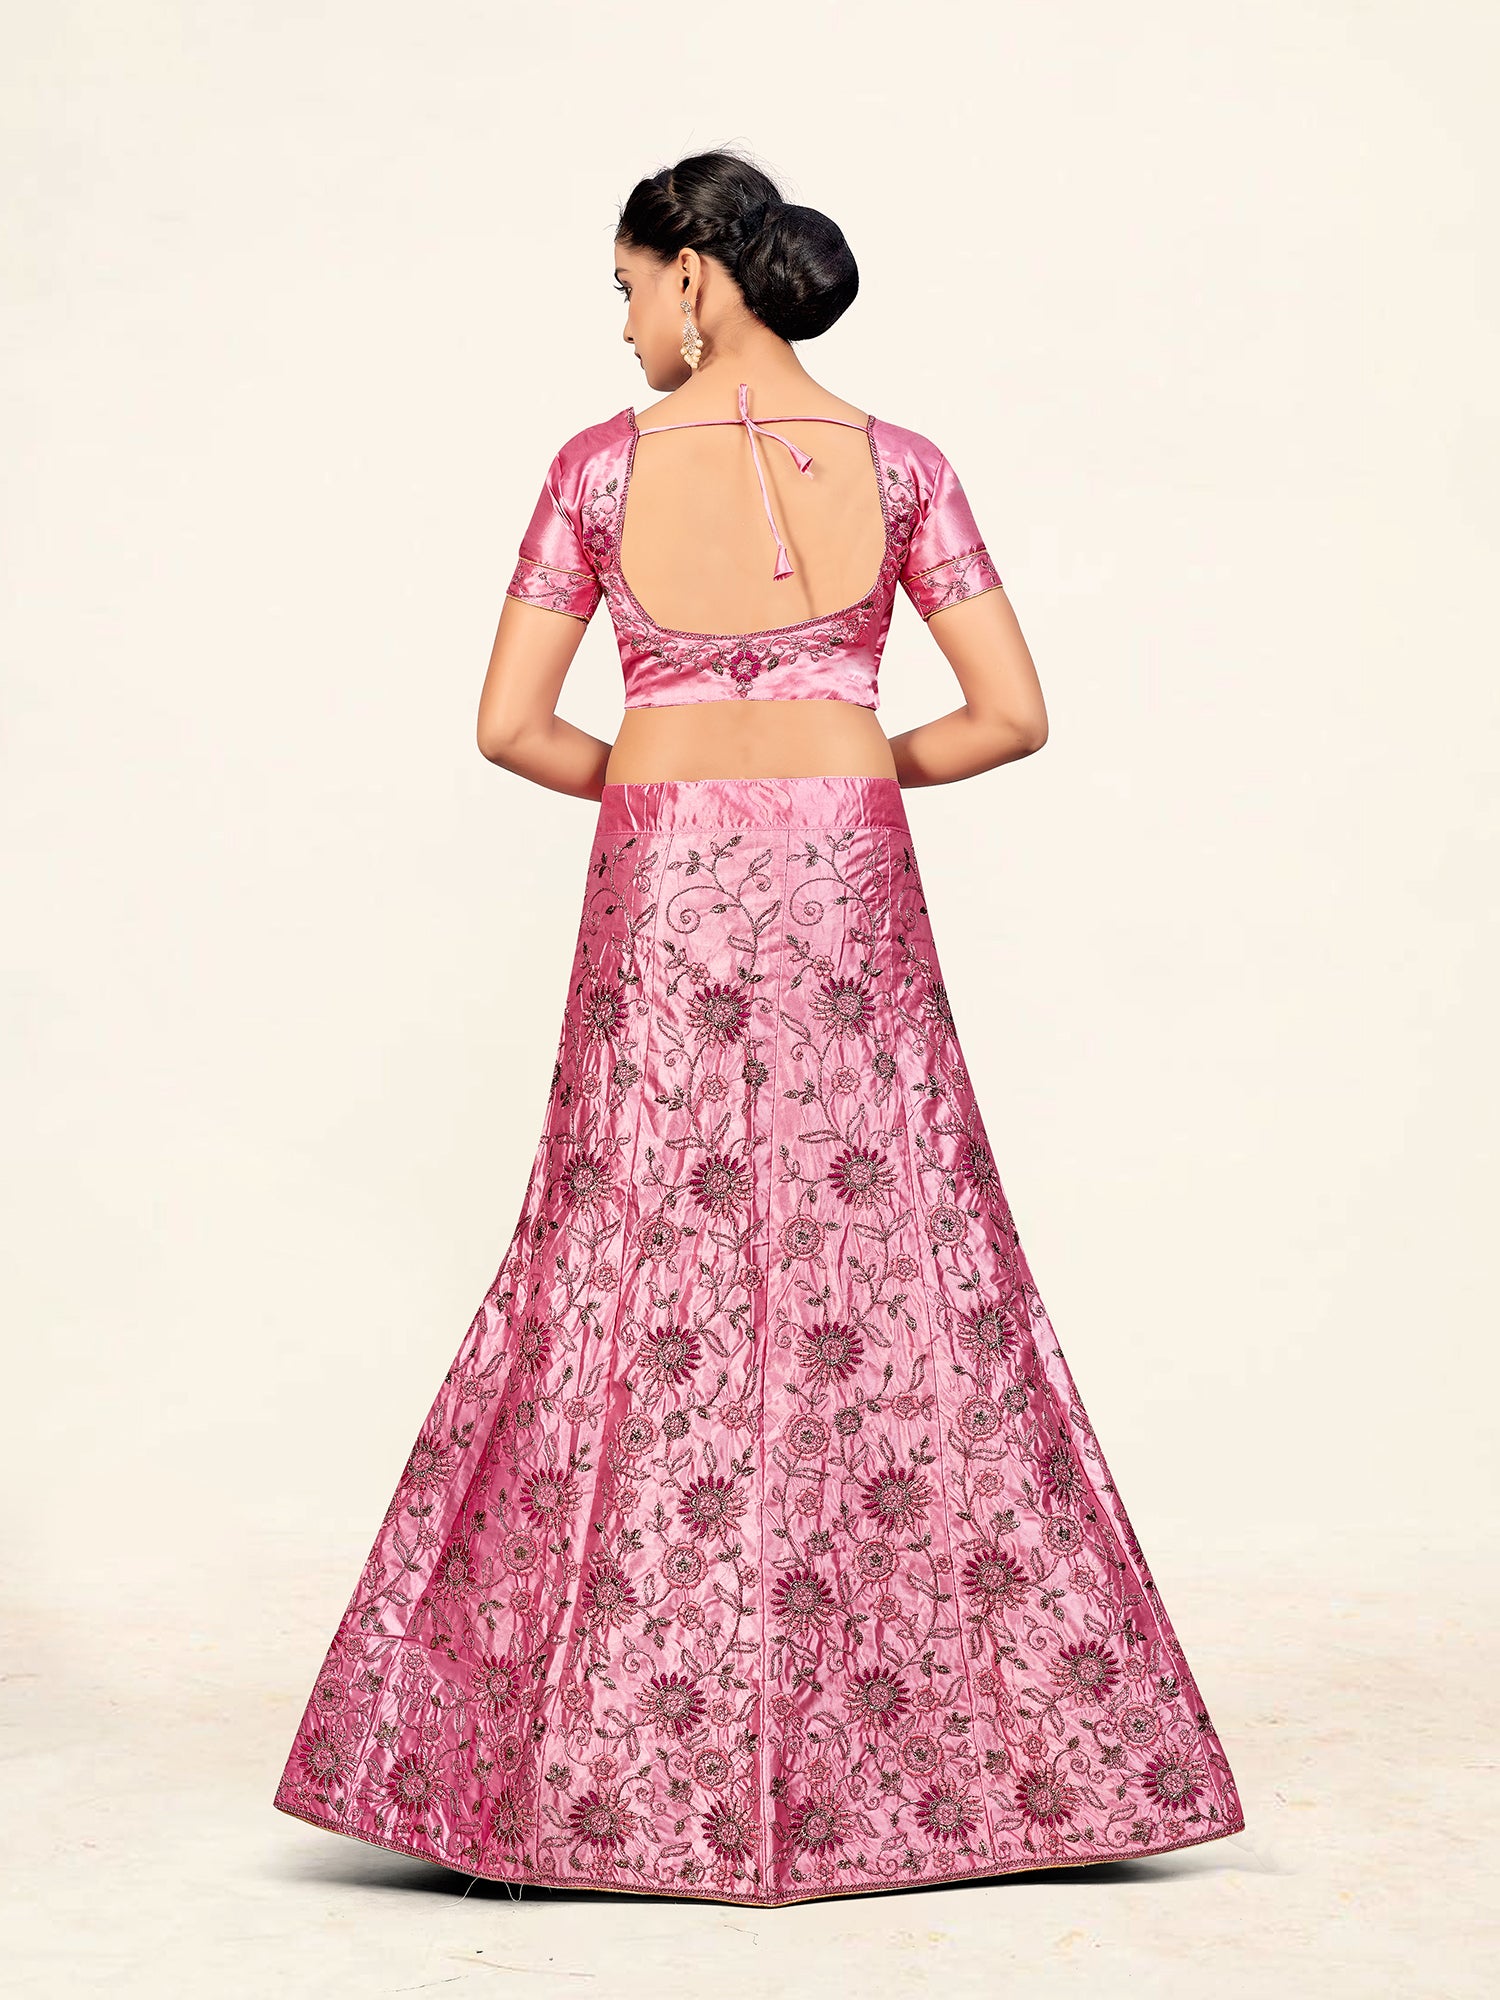 Women's pink Color designer Semi Stiched Lehenga choli set with dupatta - Sweet Smile